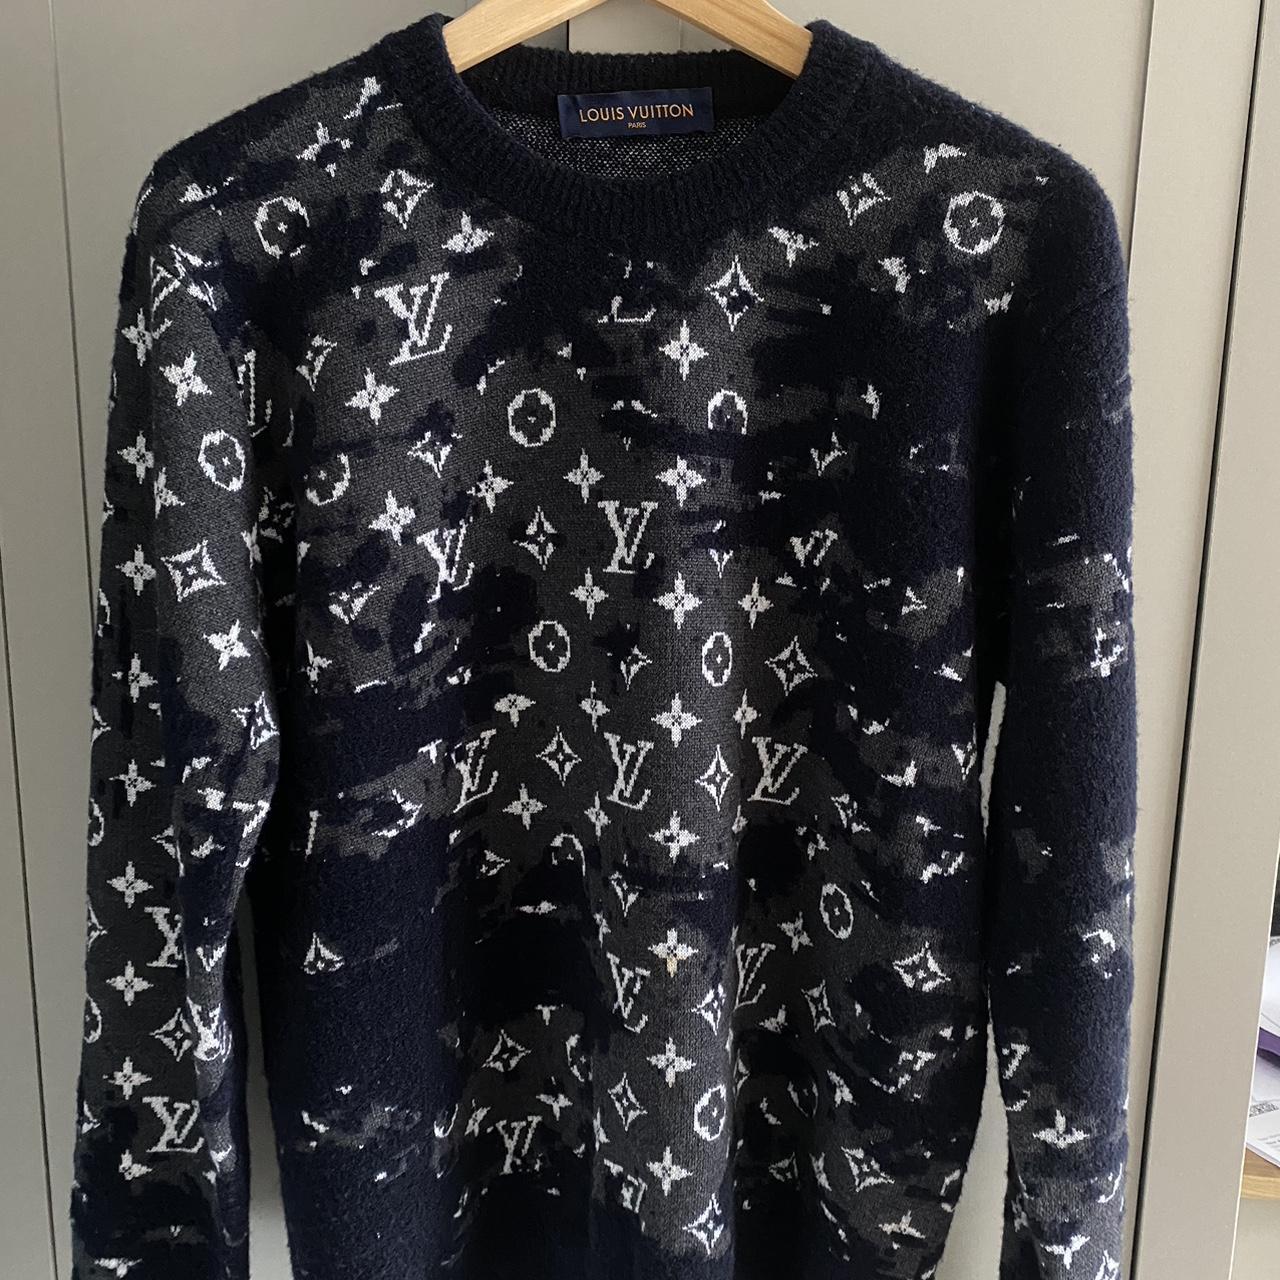 Ovrnundr on X: Supreme x Louis Vuitton “Brown” 1 of 1 hoodie is